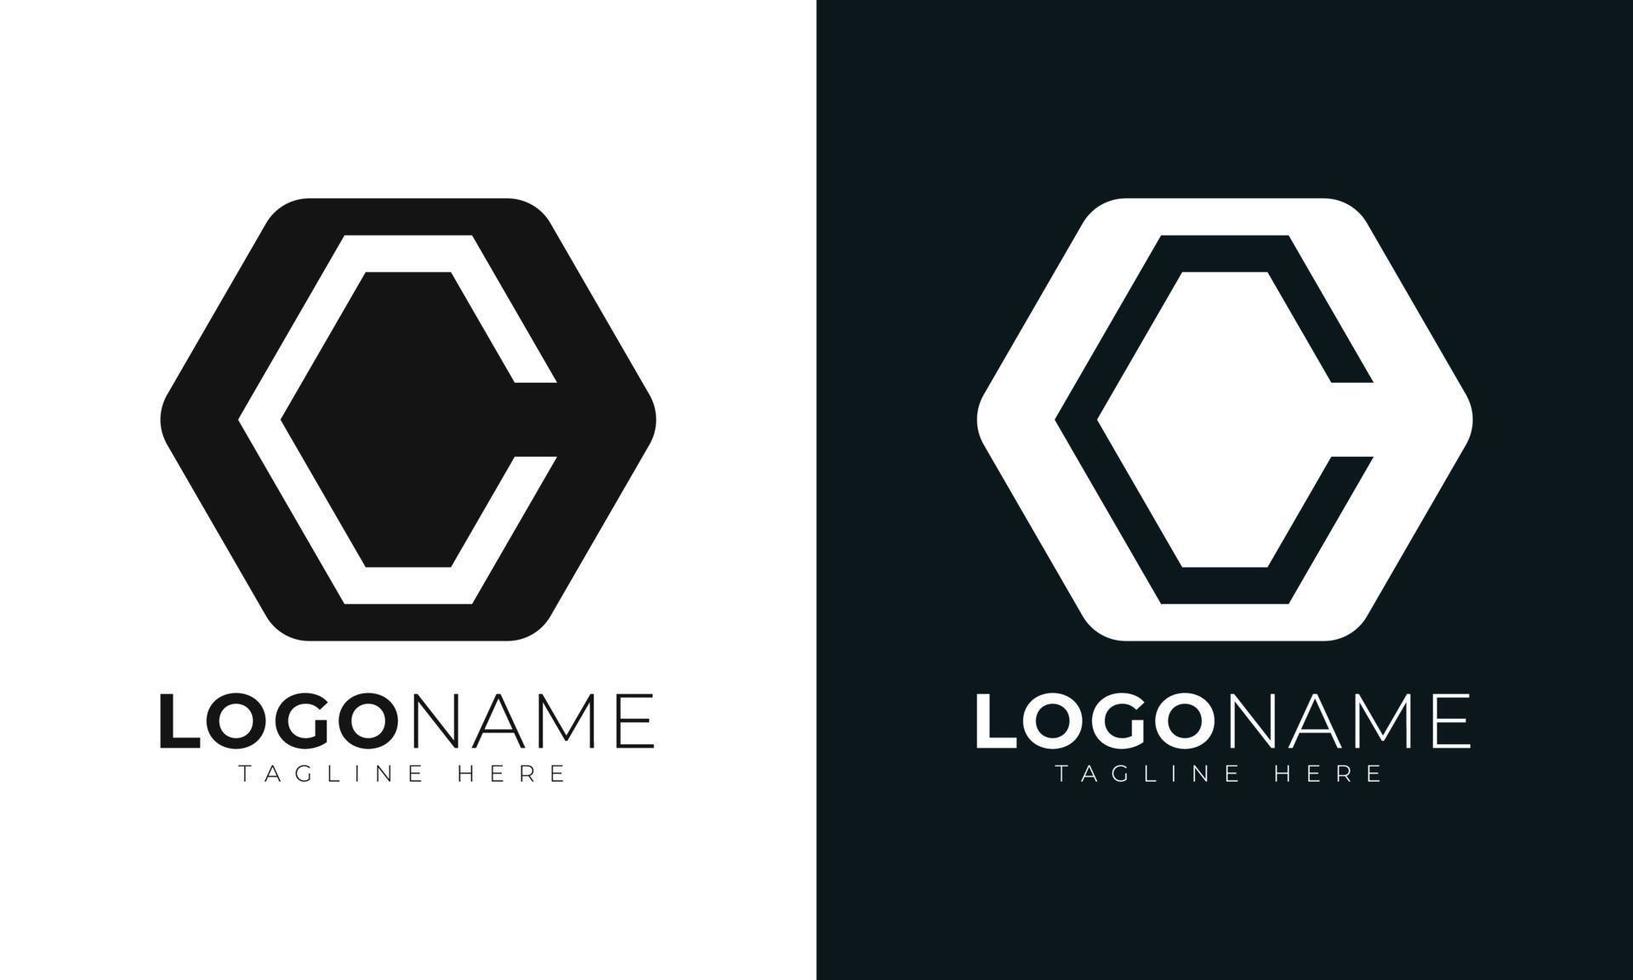 modelo de design de vetor de logotipo de letra inicial c. com formato hexagonal. estilo poligonal.